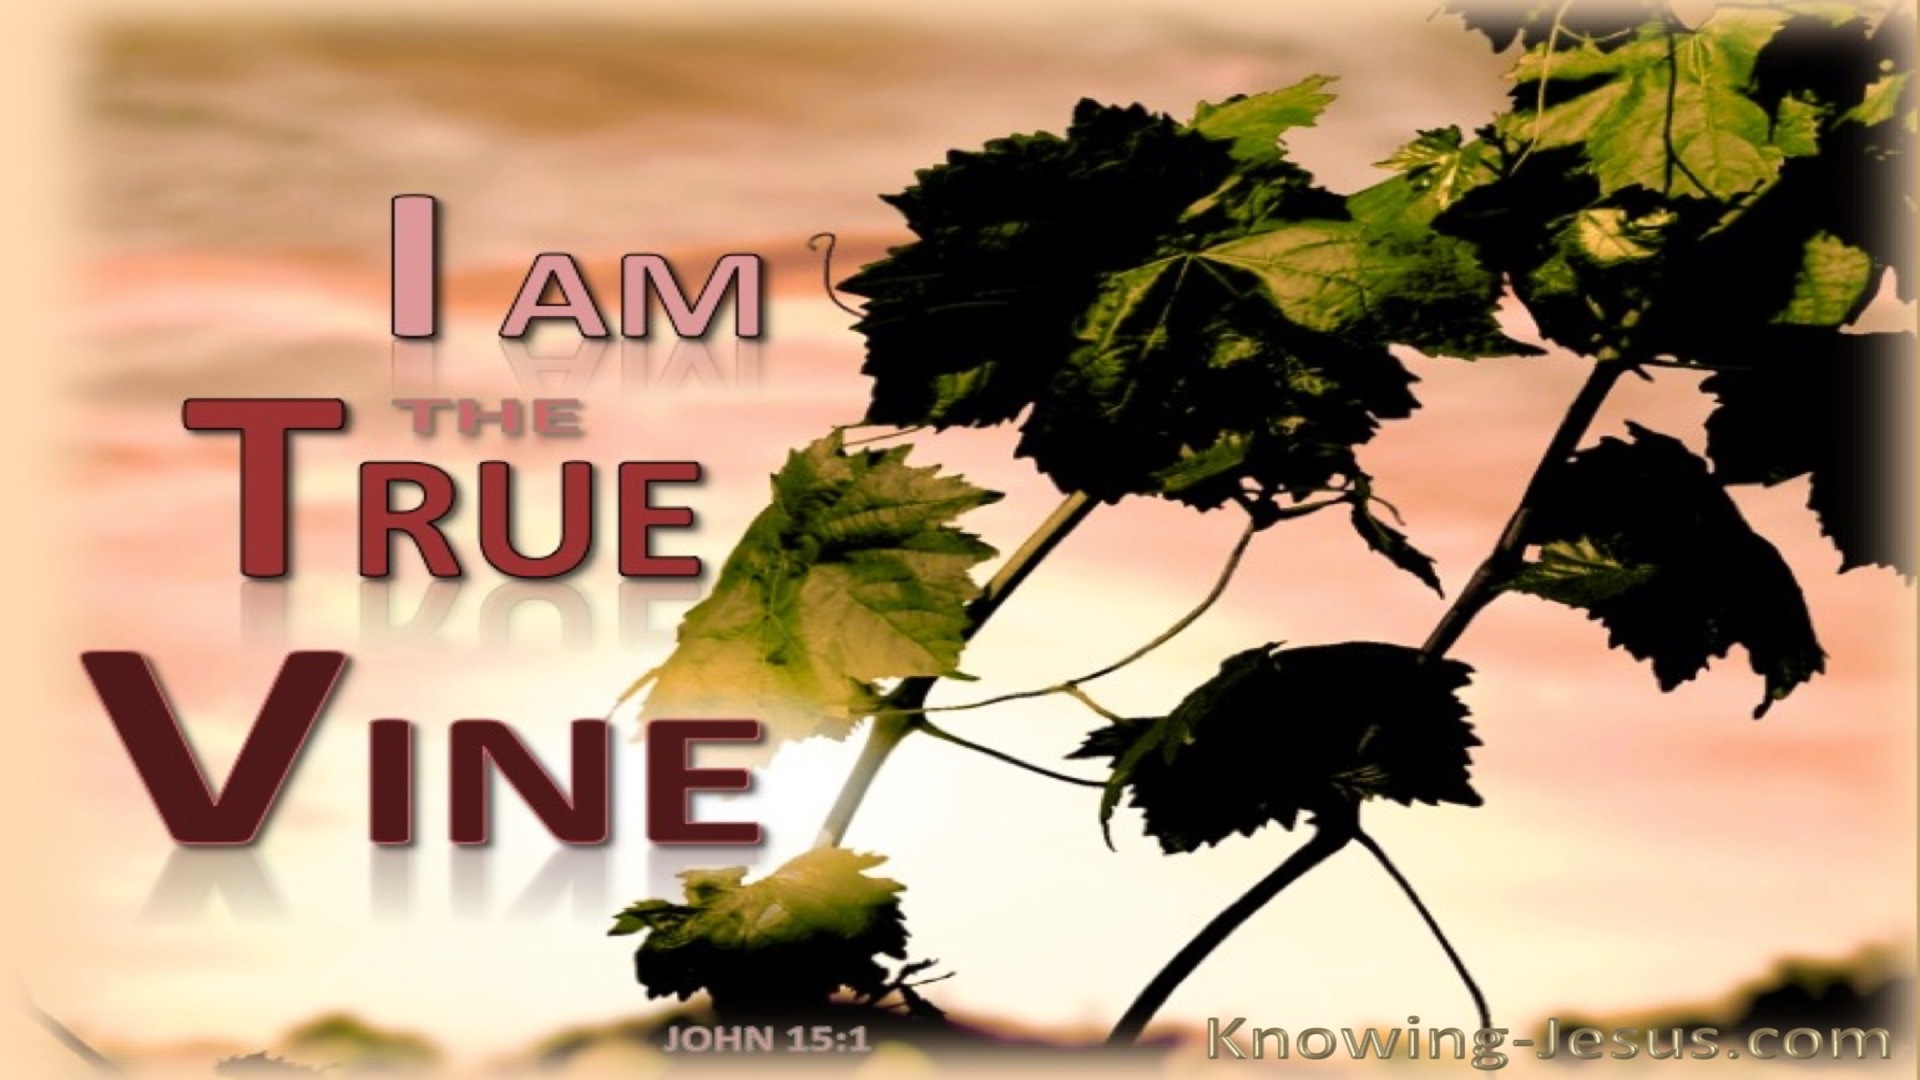 John 15:1 The True Vine (brown)